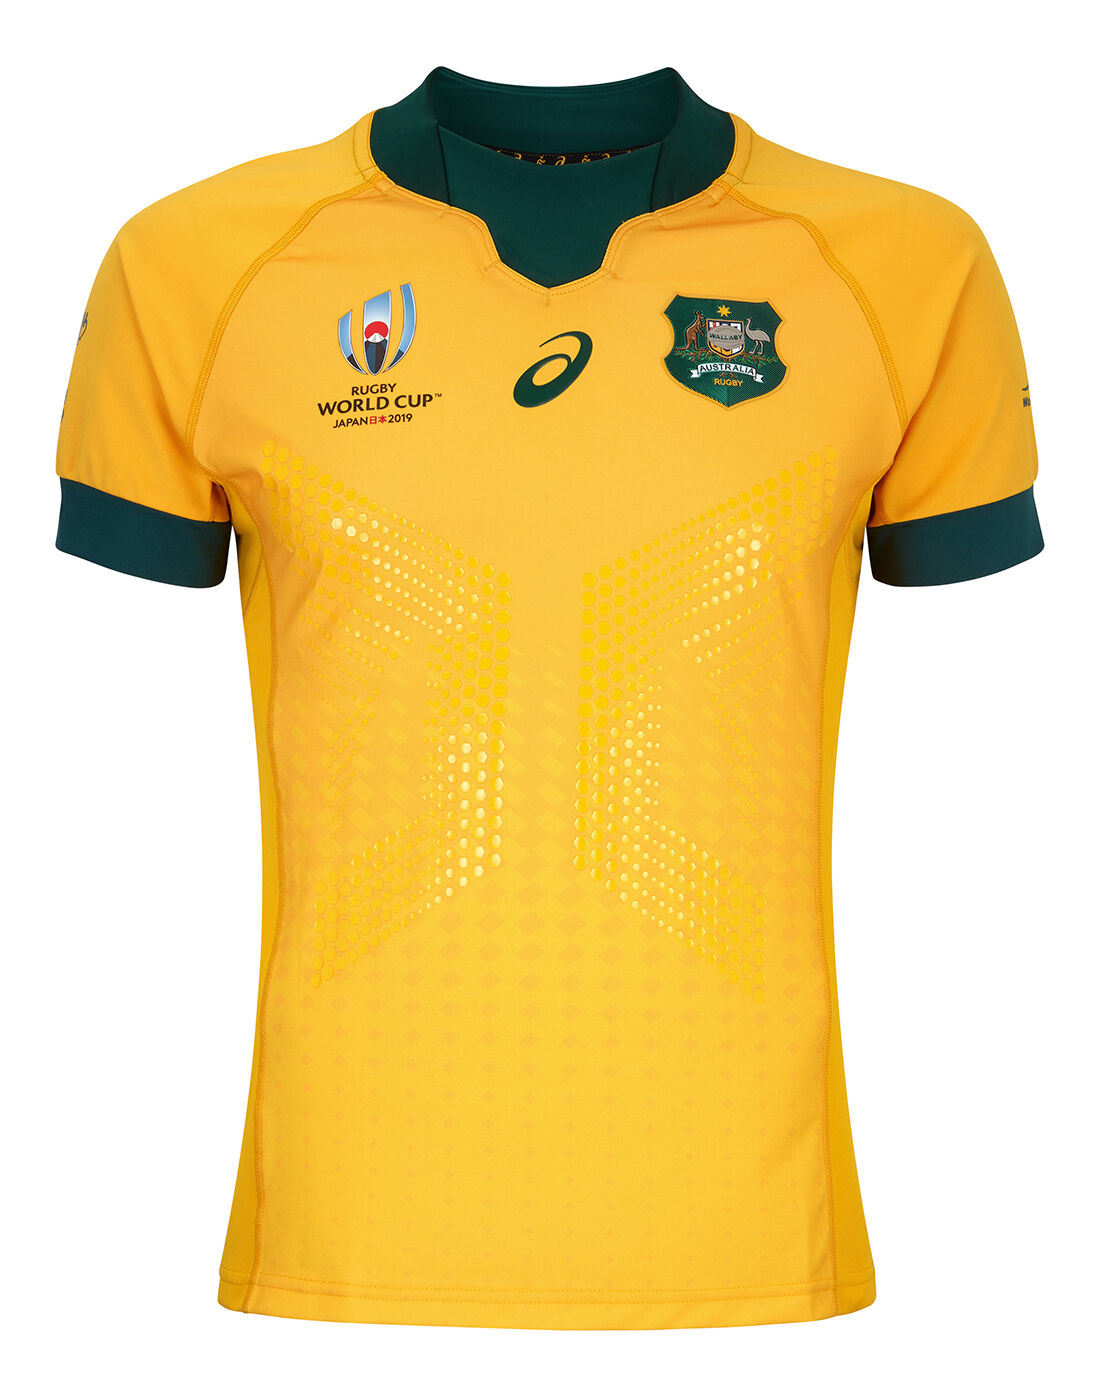 australia wc 2019 jersey